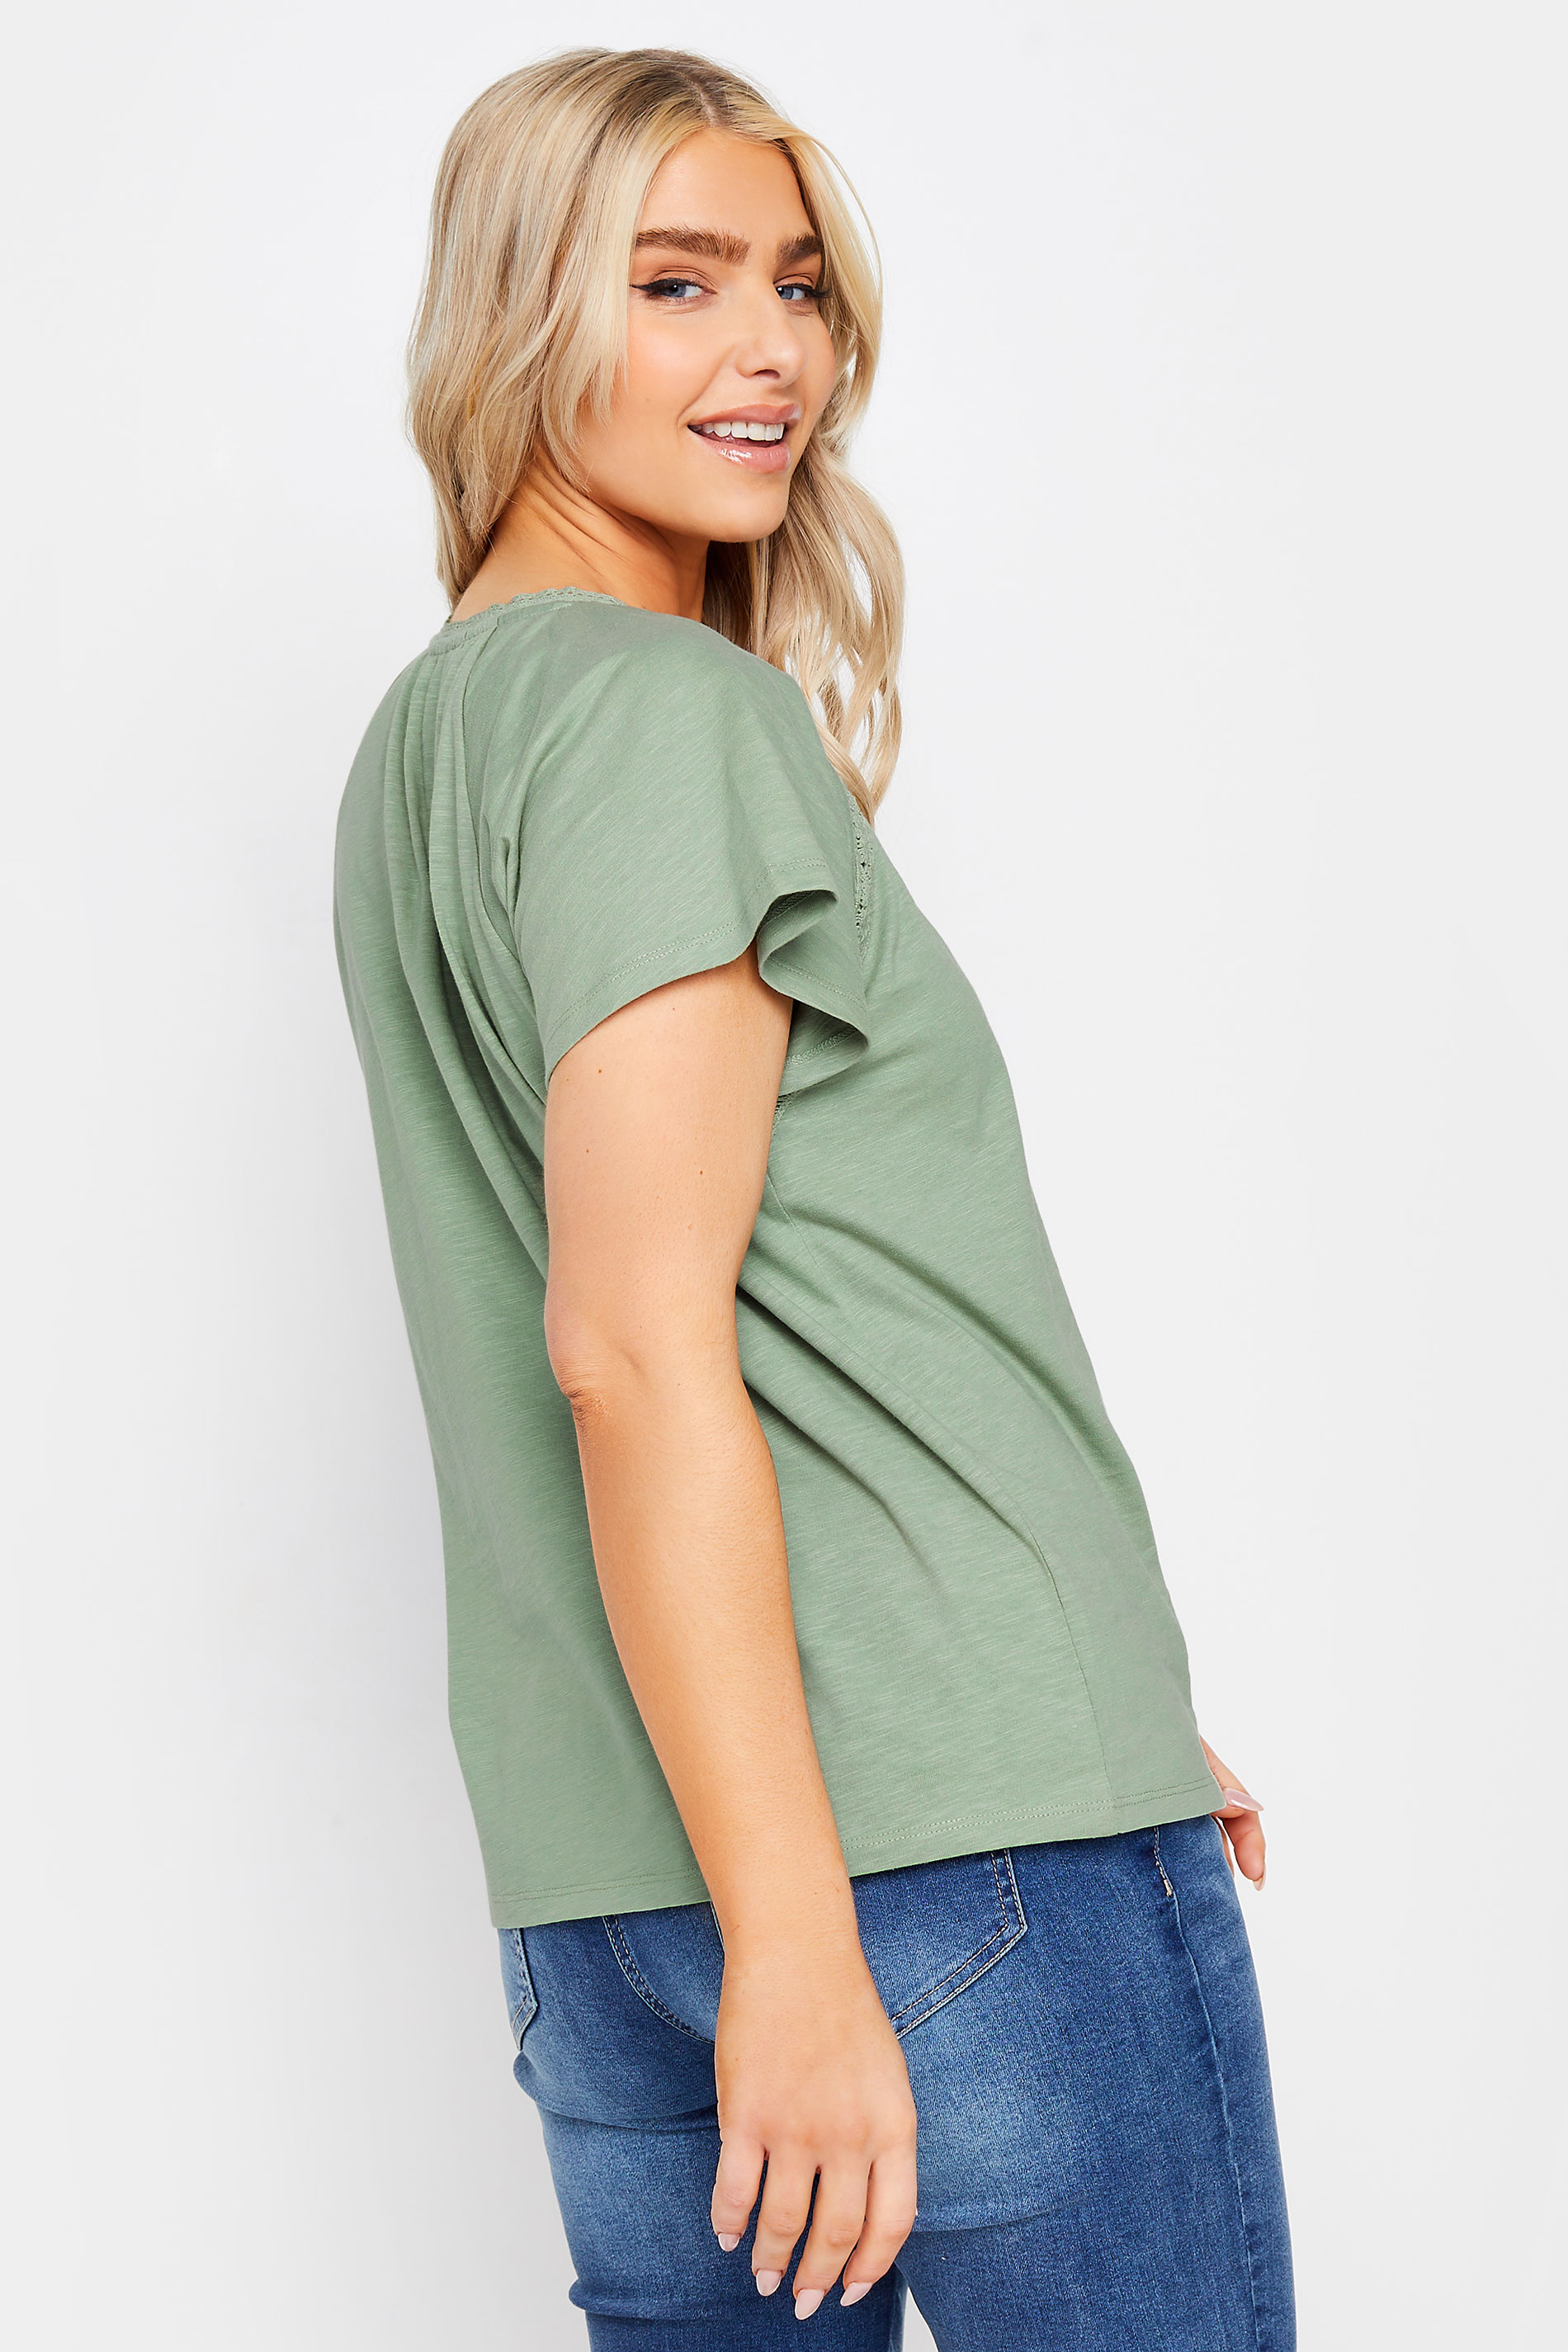 M&Co Green Lace Detail Cotton Top | M&Co 3